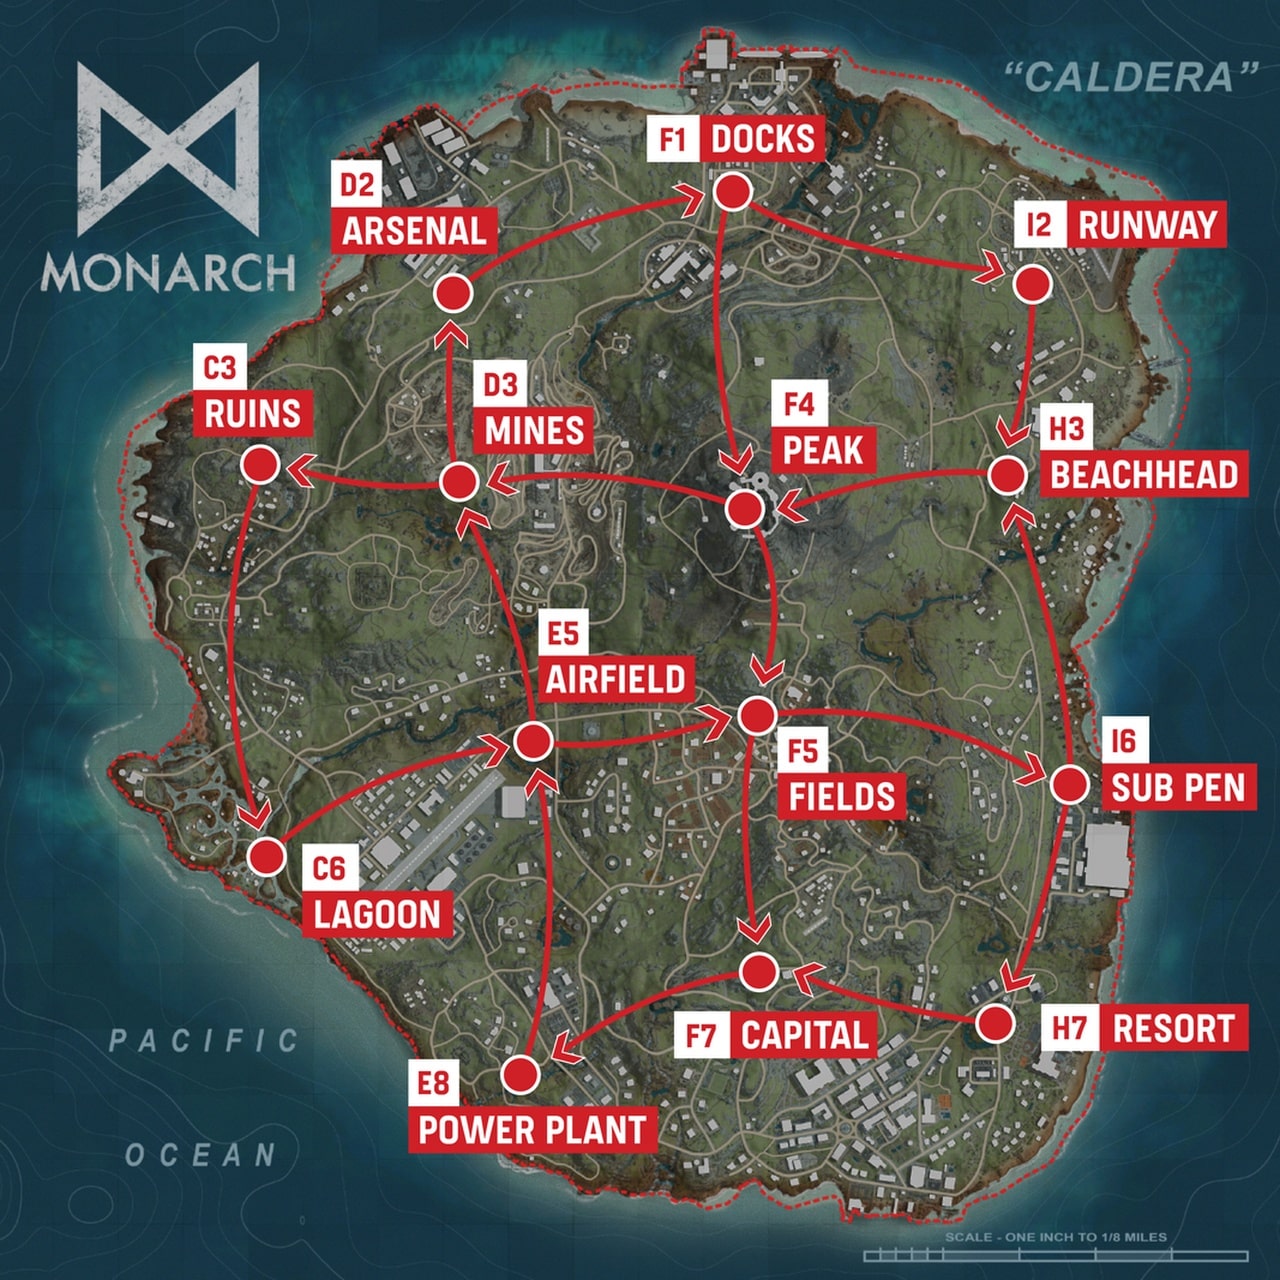 Call-of-Duty-Warzone-Caldera-Transit-Station-Locations-Map